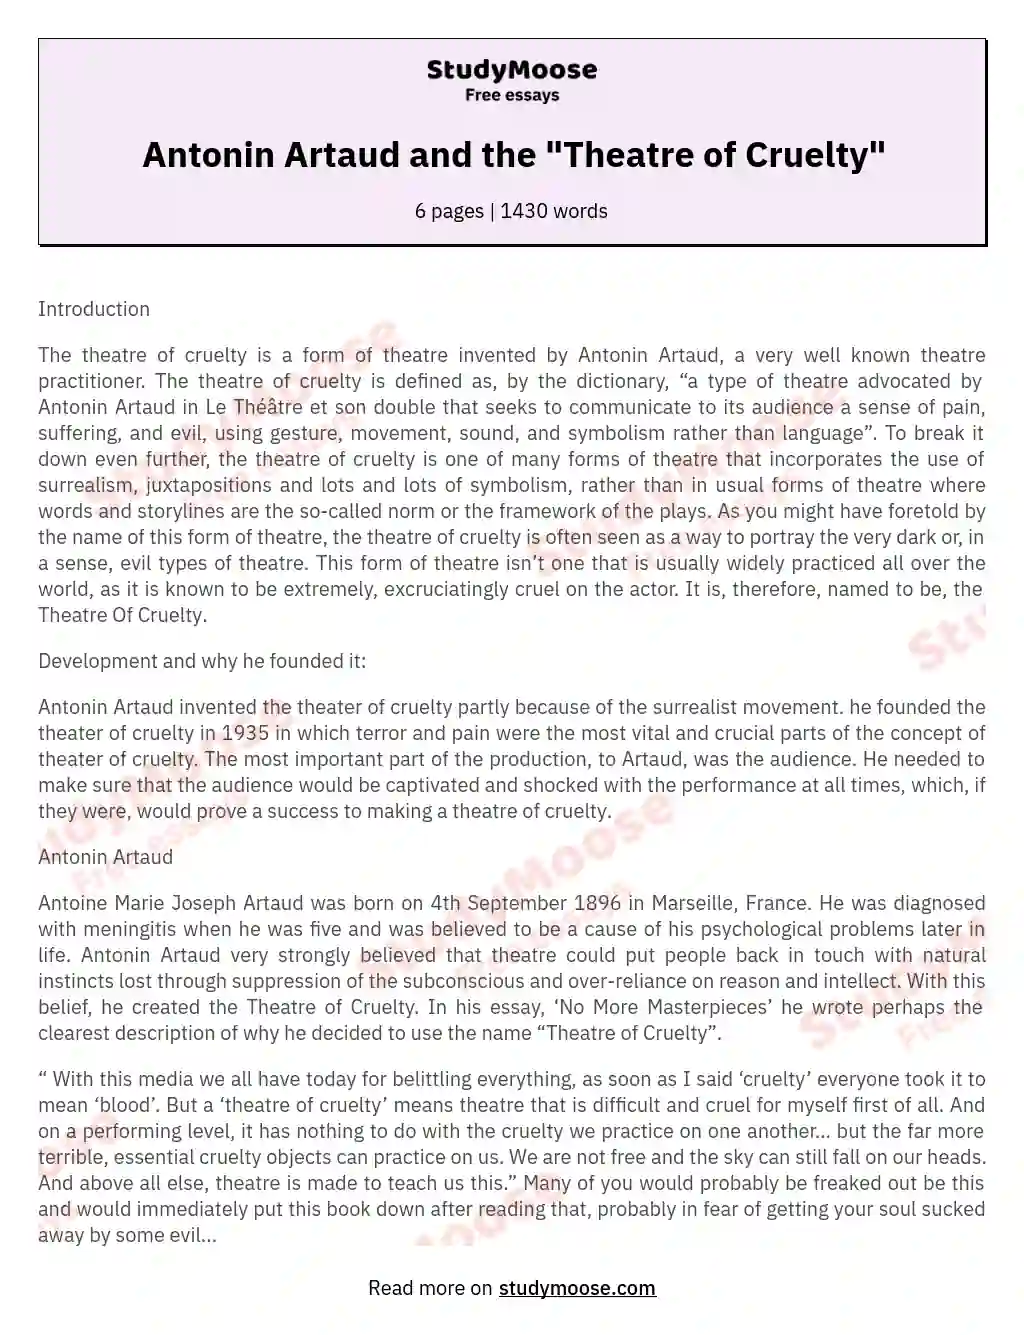 Antonin Artaud and the "Theatre of Cruelty" essay